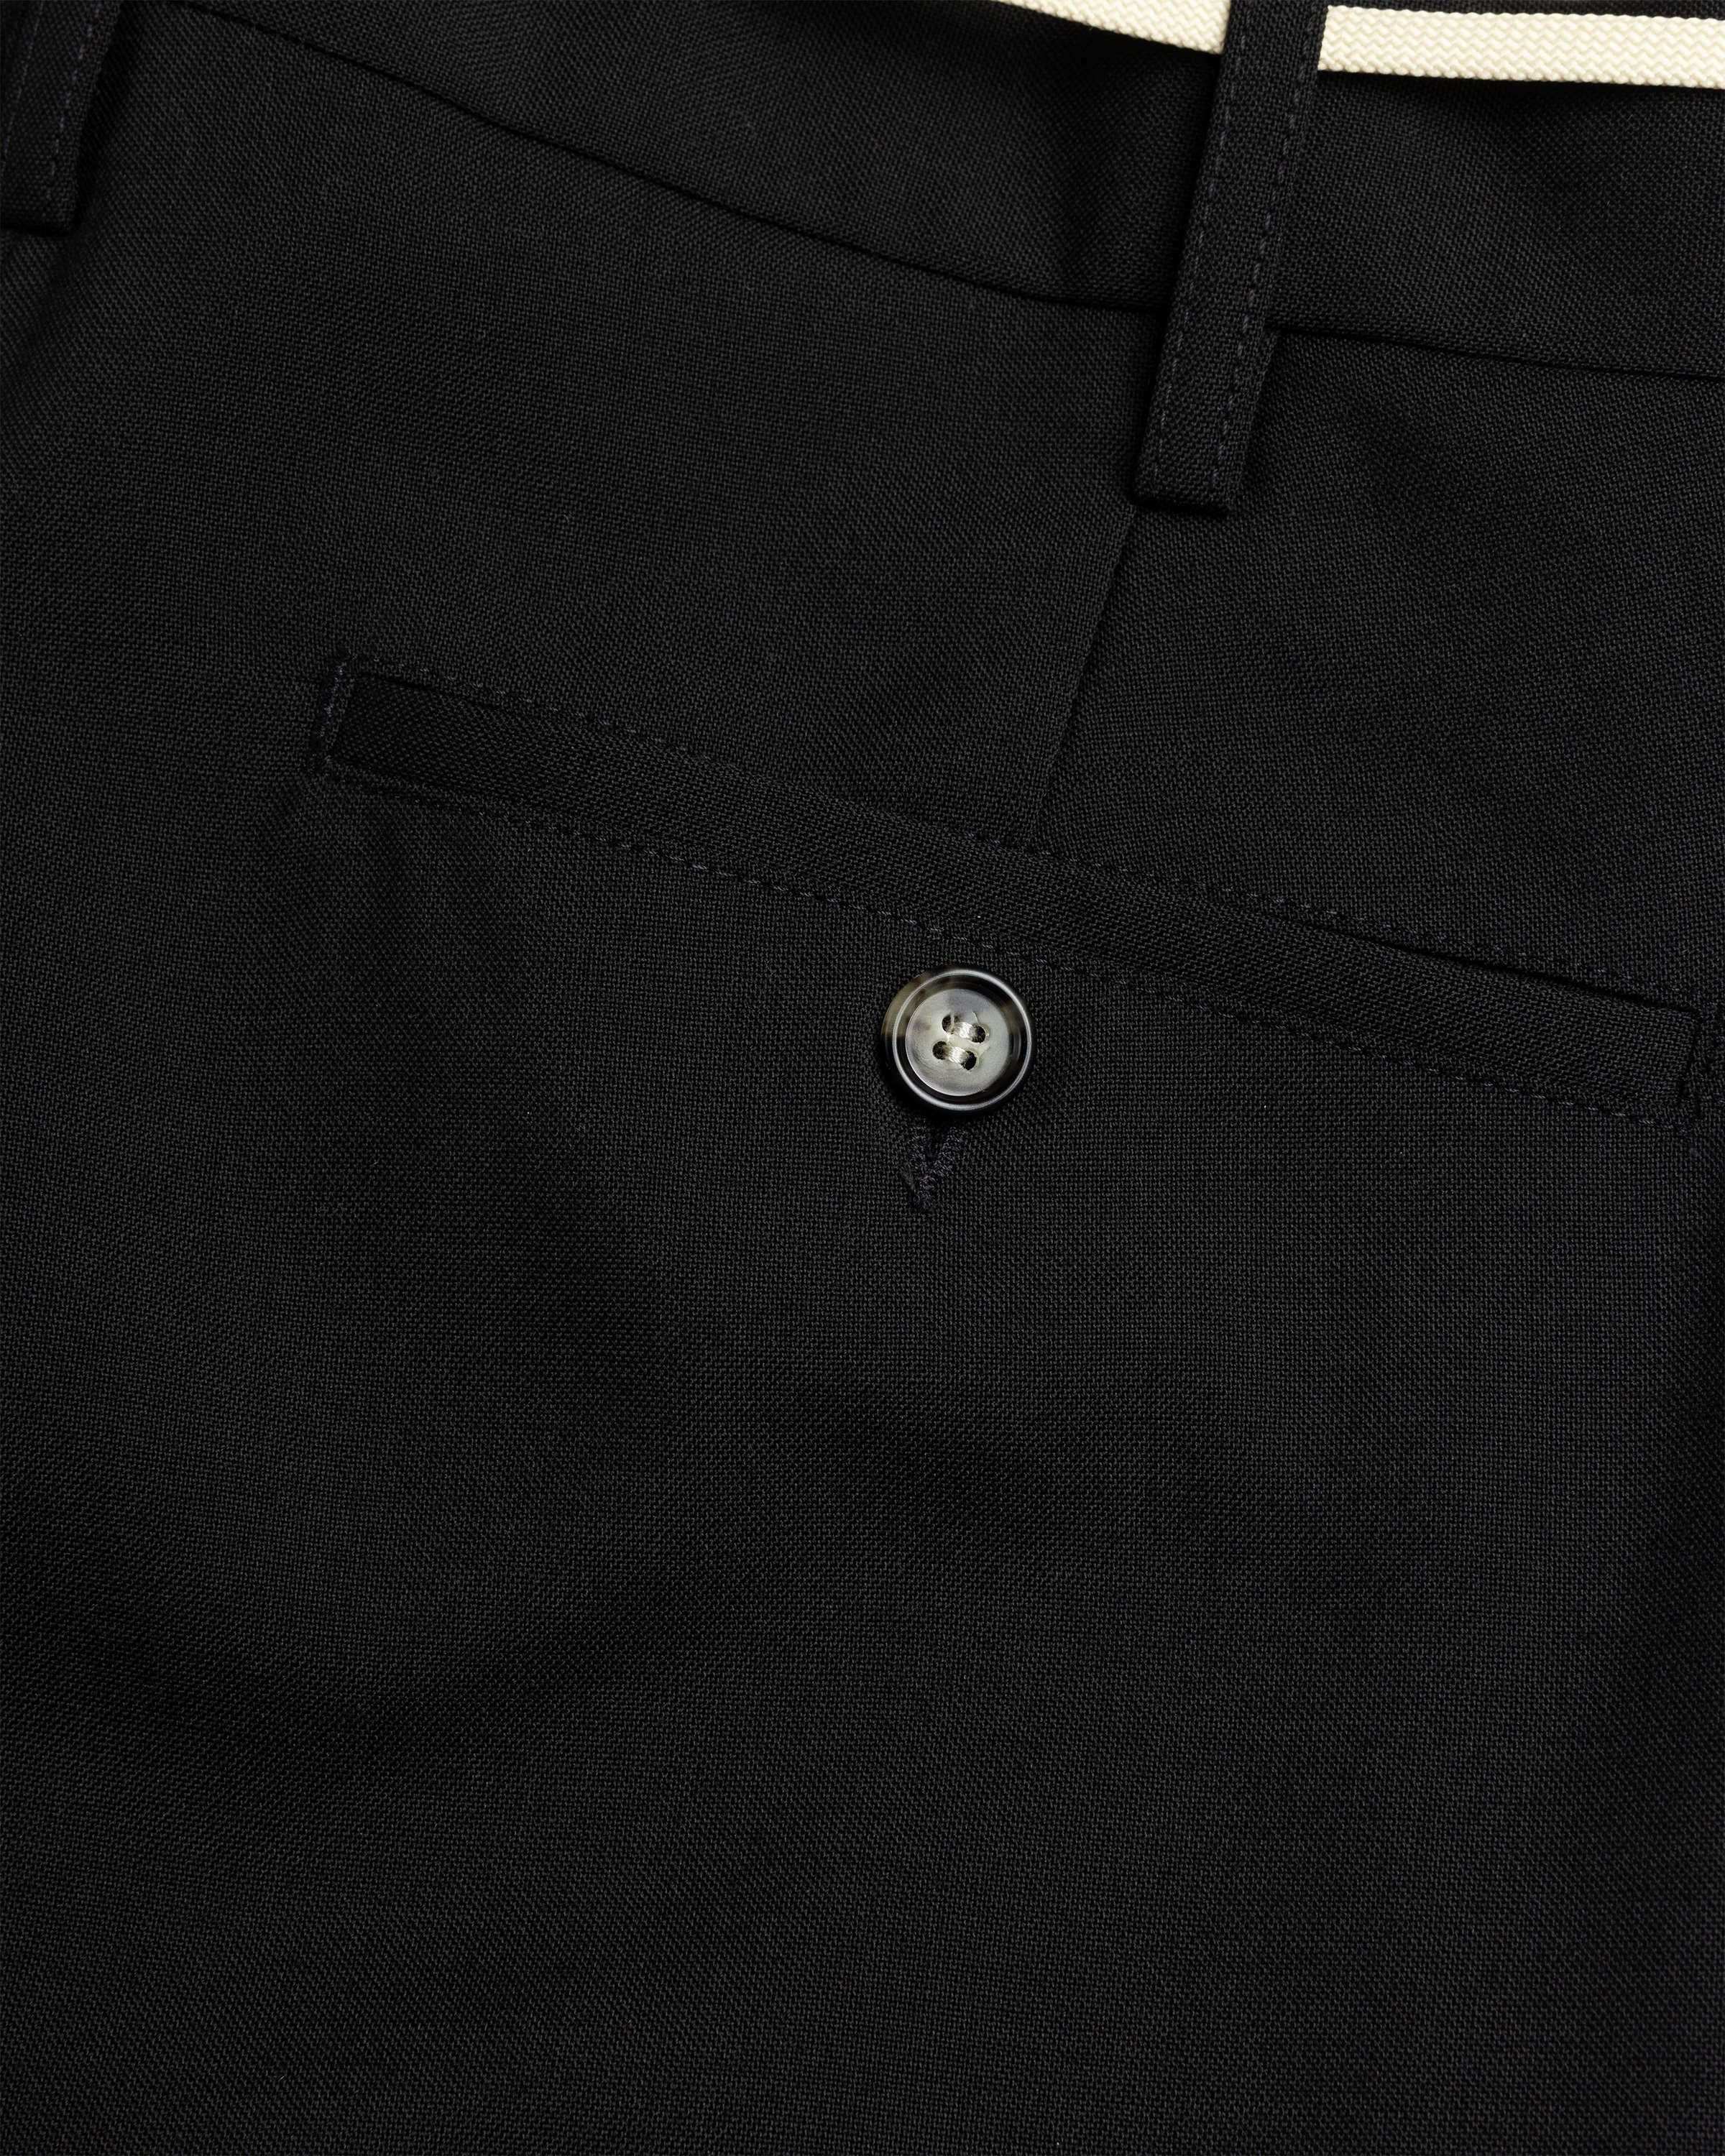 Marni - Wool Pant Black - Clothing - Black - Image 5